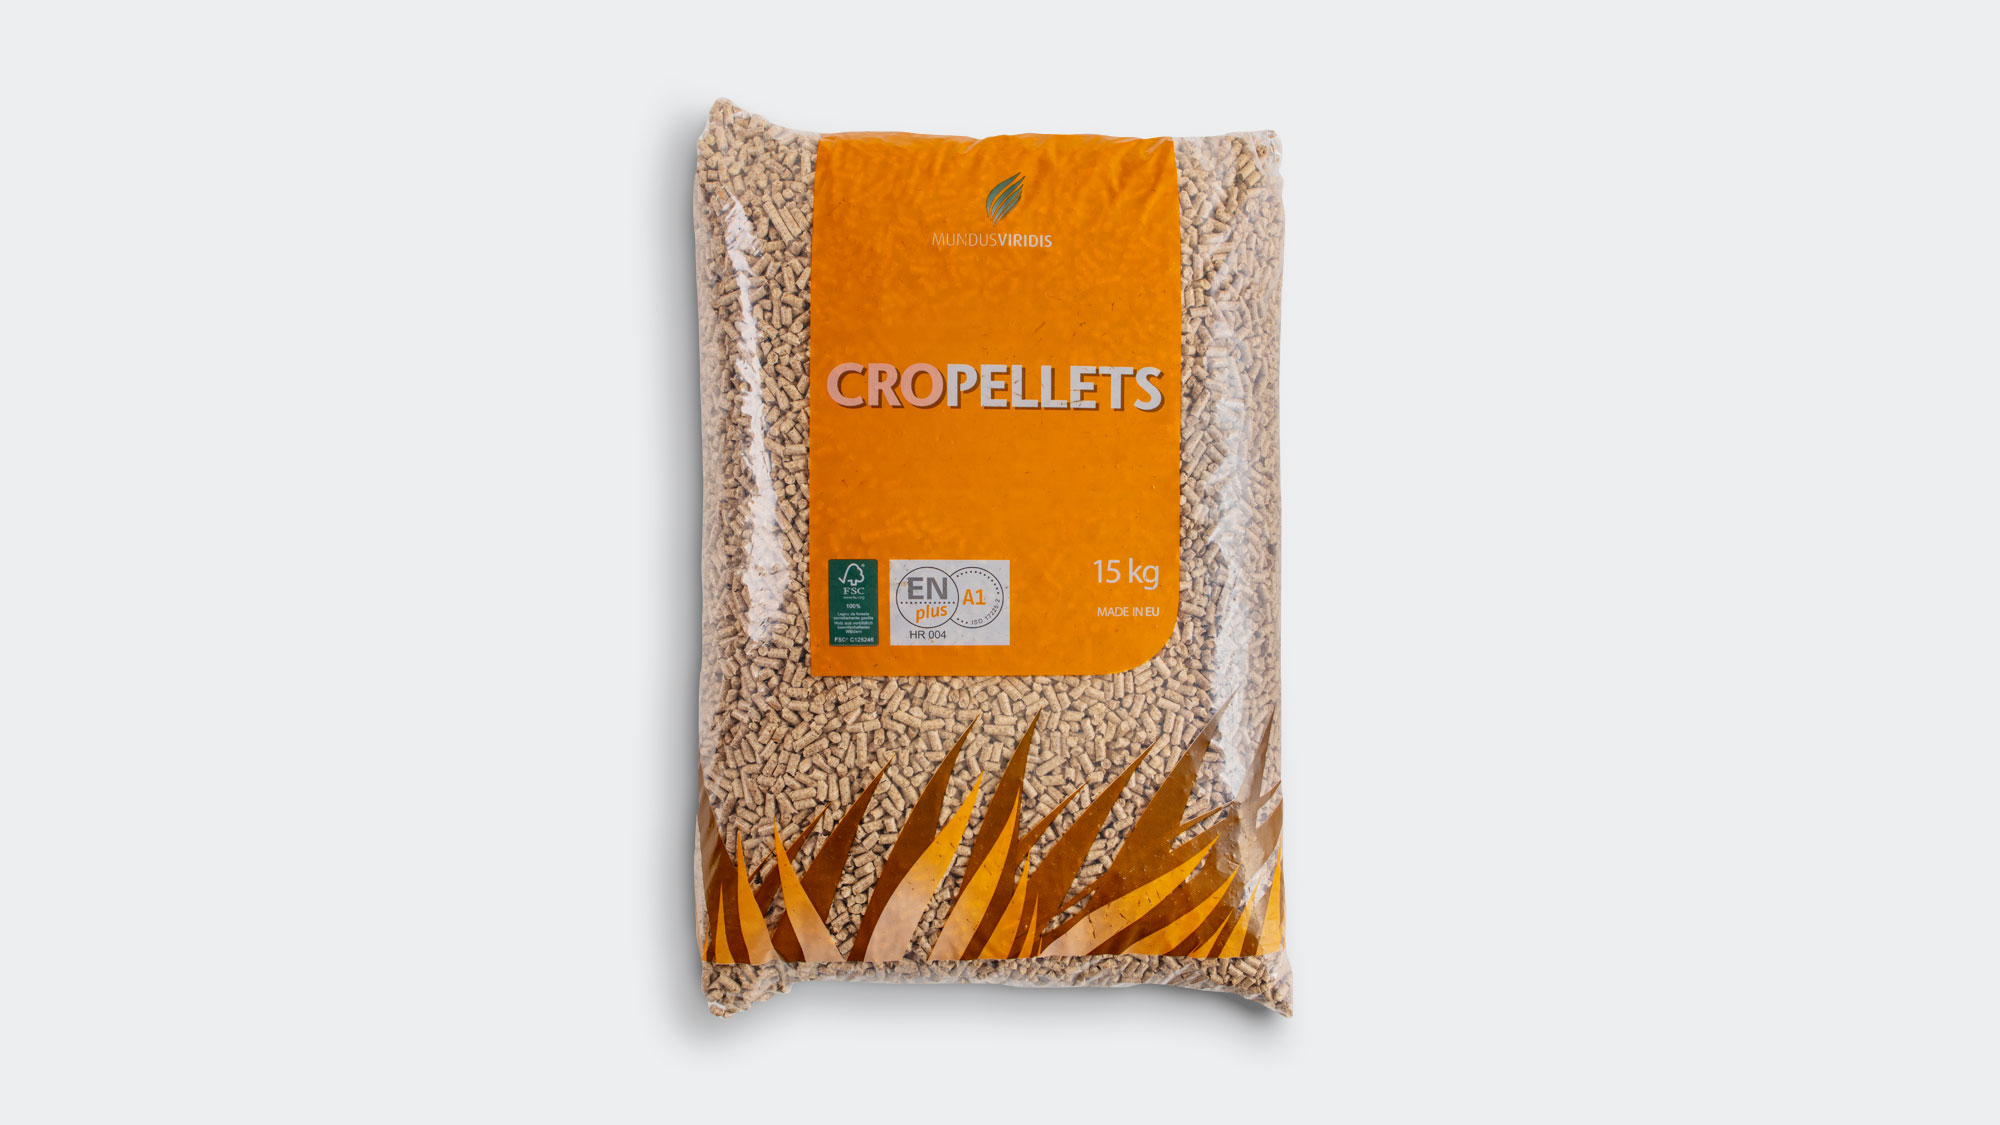 Beech pellets - Cropellets - Image 1